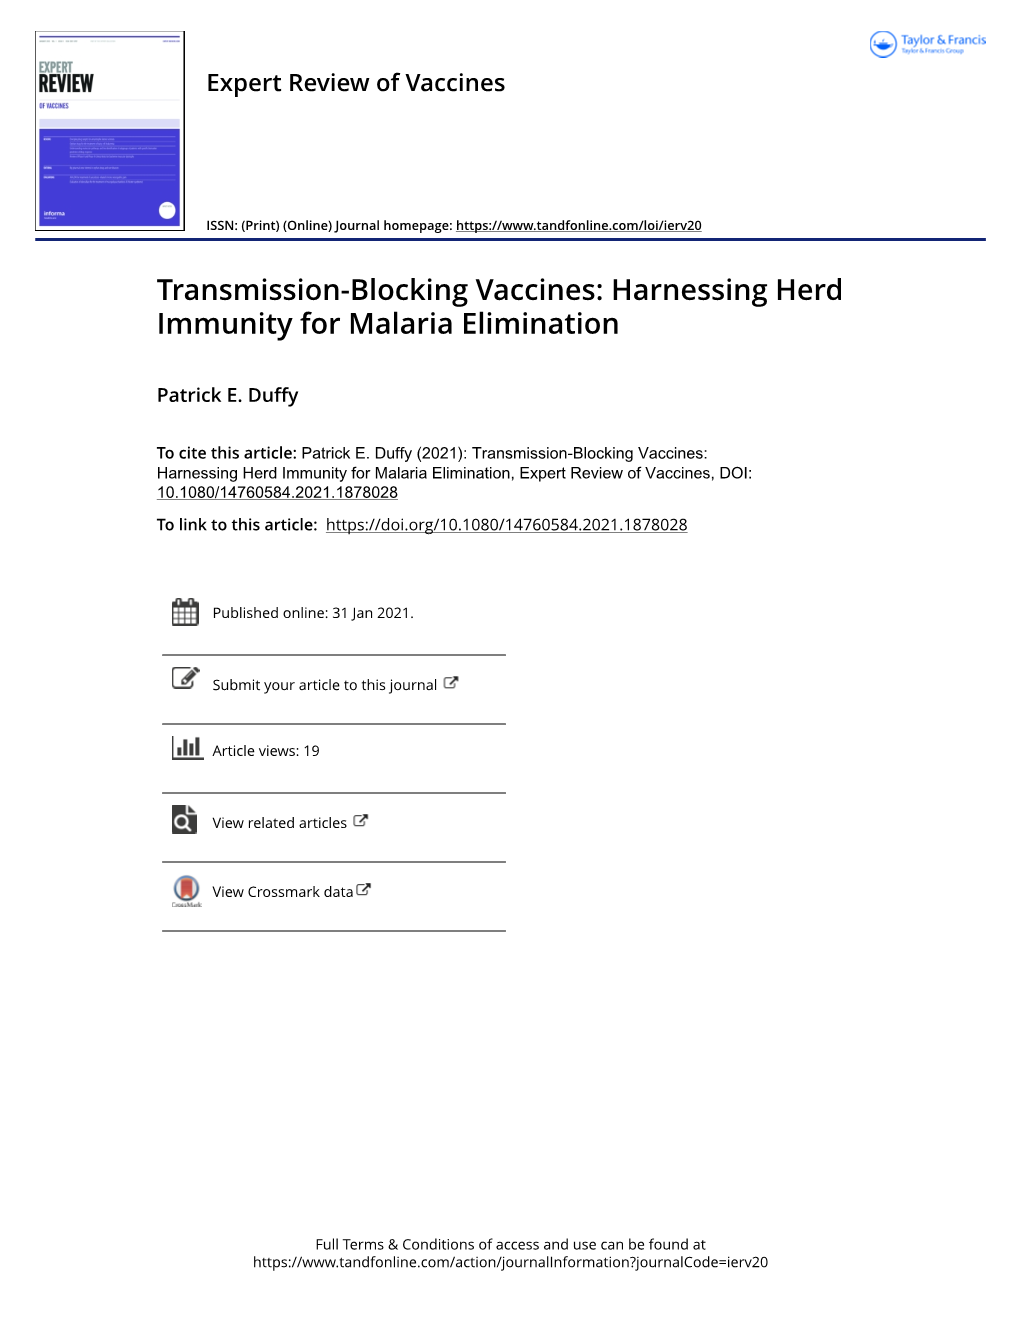 Harnessing Herd Immunity for Malaria Elimination